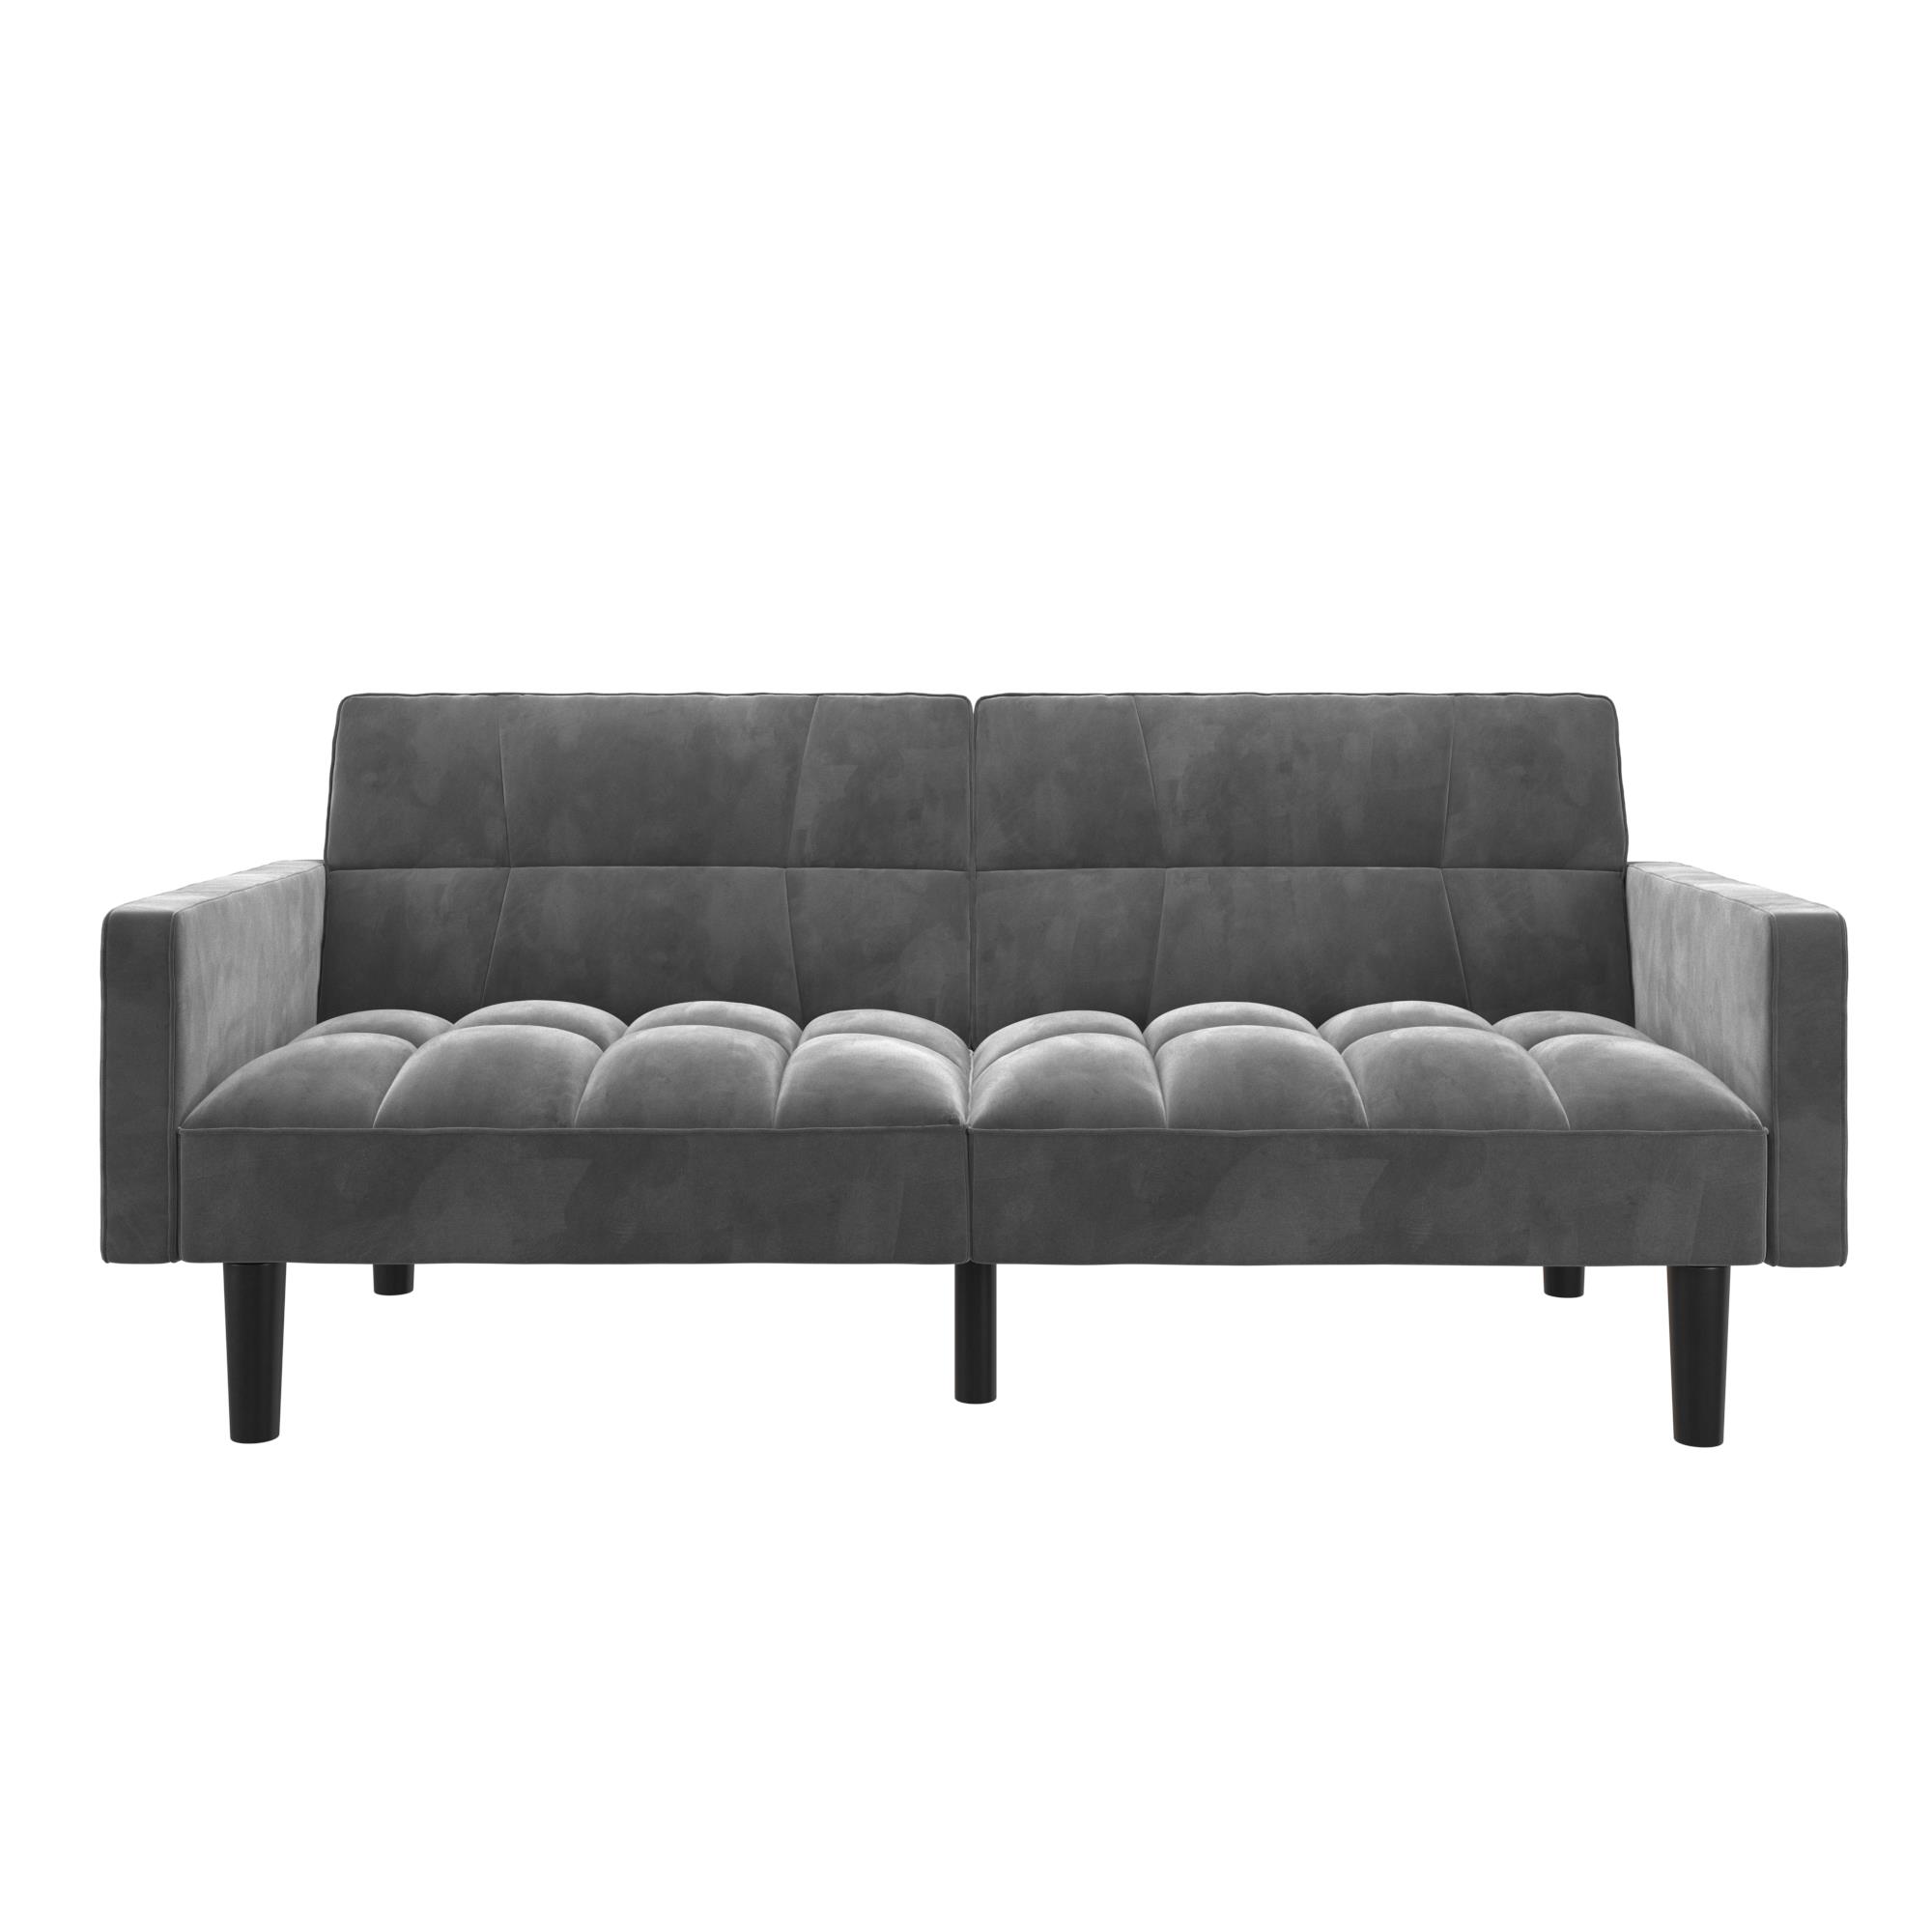 DHP, Harper Convertible Sofa Sleeper Futon with Arms, Grey Microfiber - image 1 of 15